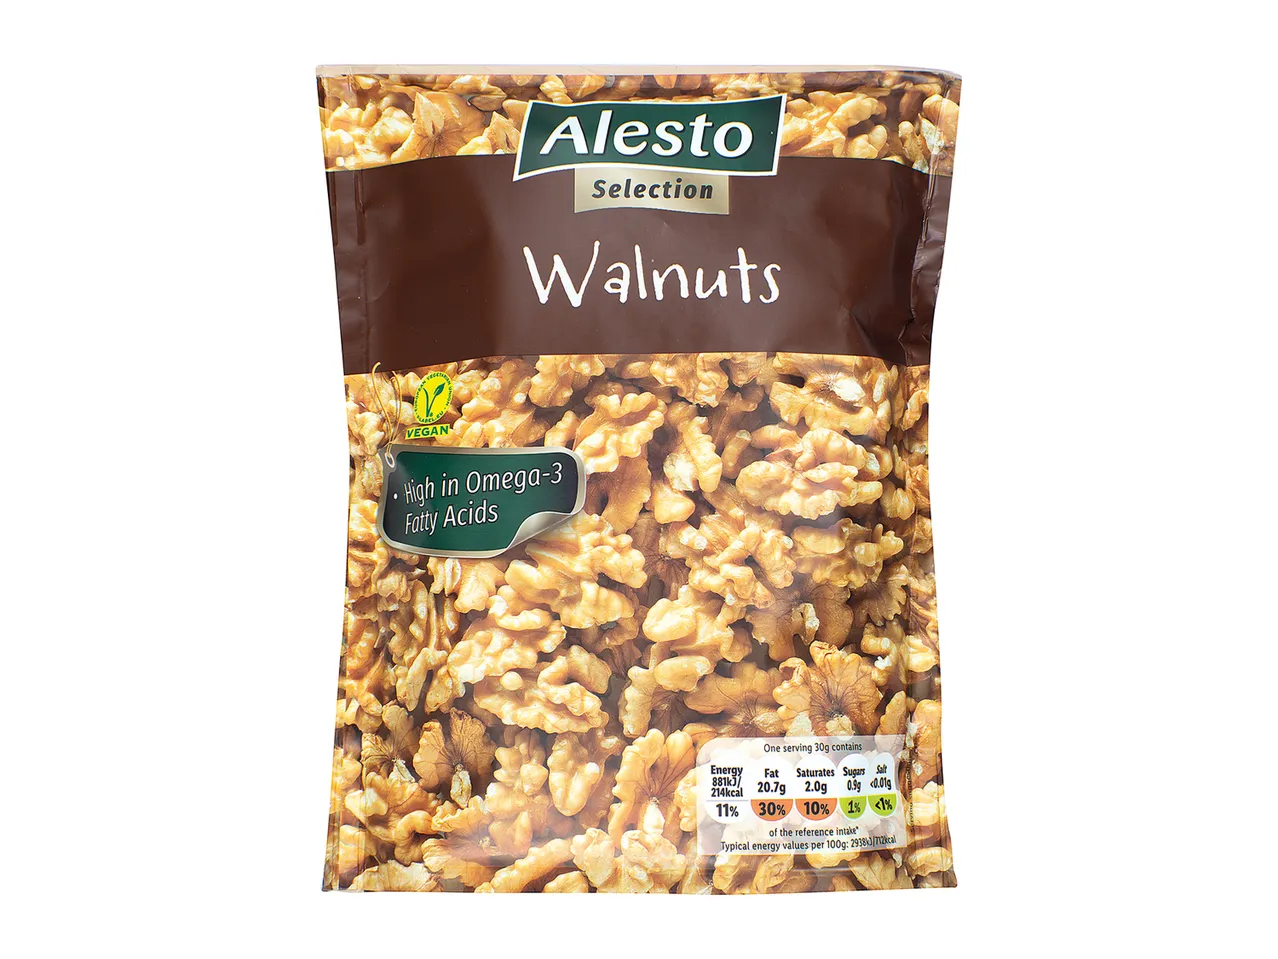 Go to full screen view: Alesto Californian Walnuts - Image 1